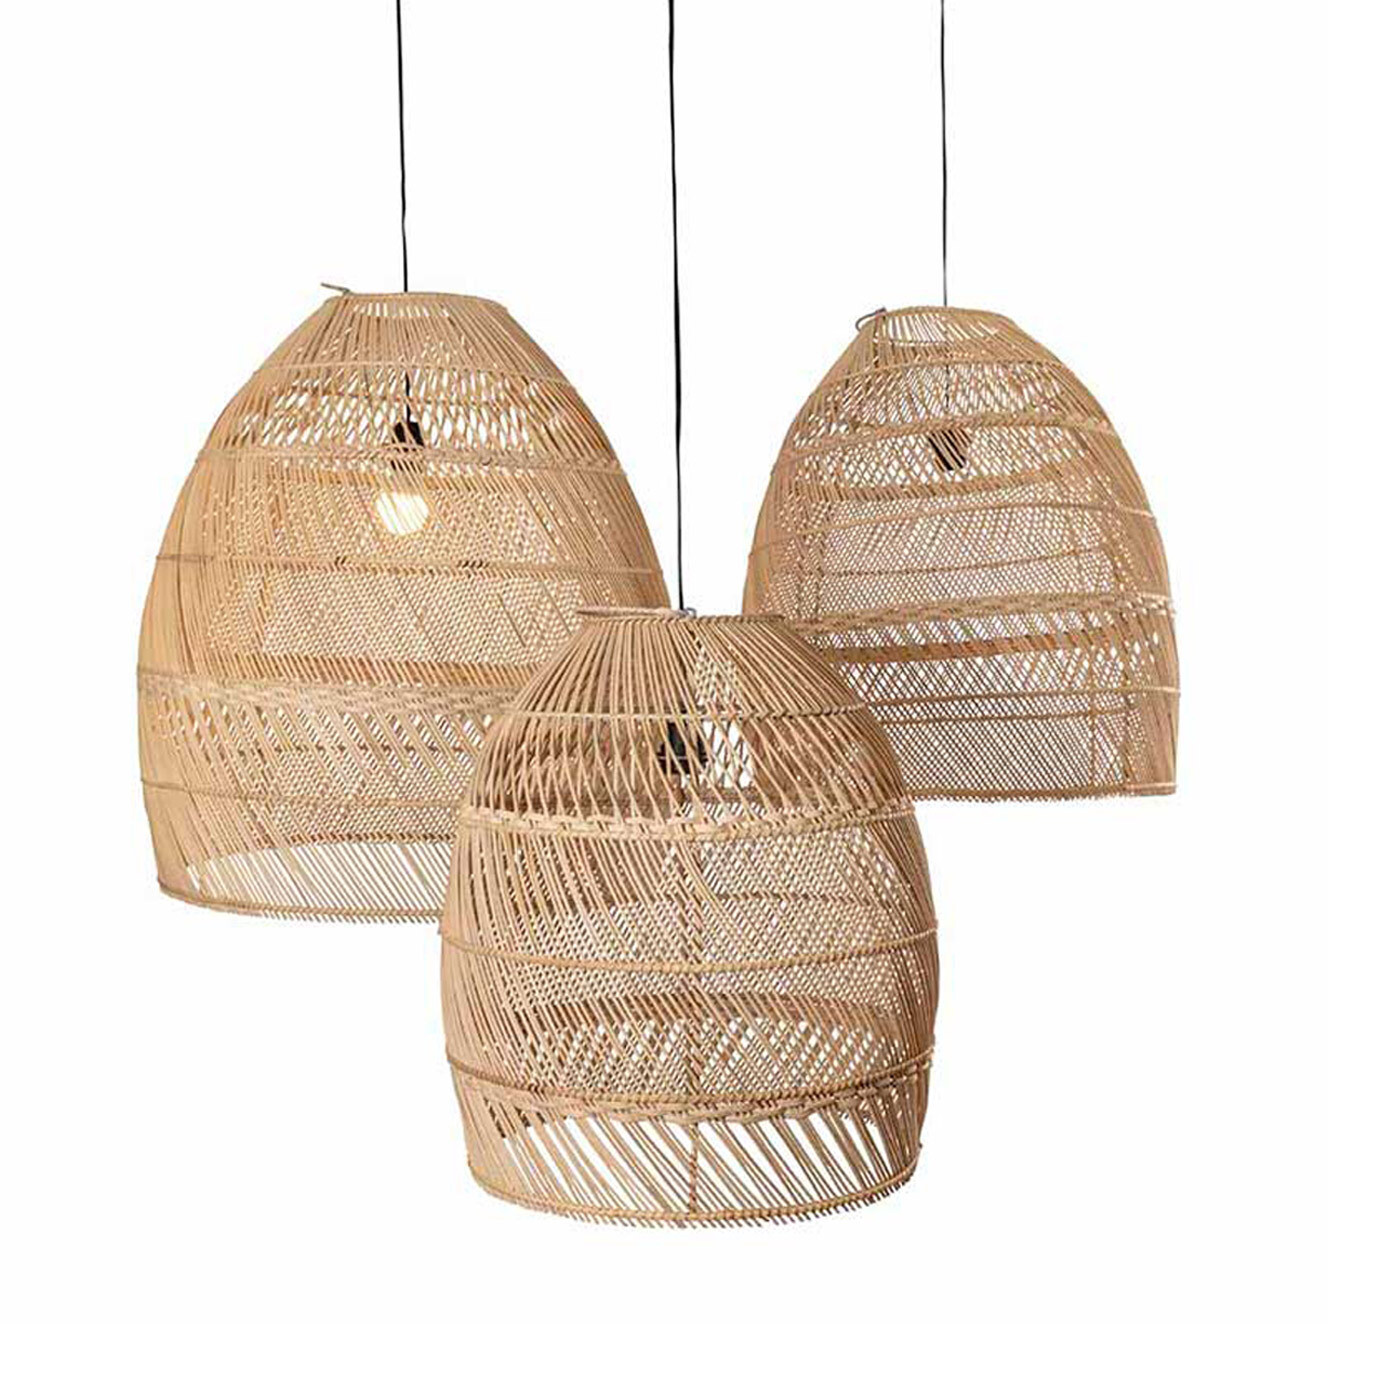 Boho lampenkap uit Bali van rotan - naturel kleur - eco design hanglampen  van het merk Orginal Home (Moon) (set van 3 of los)